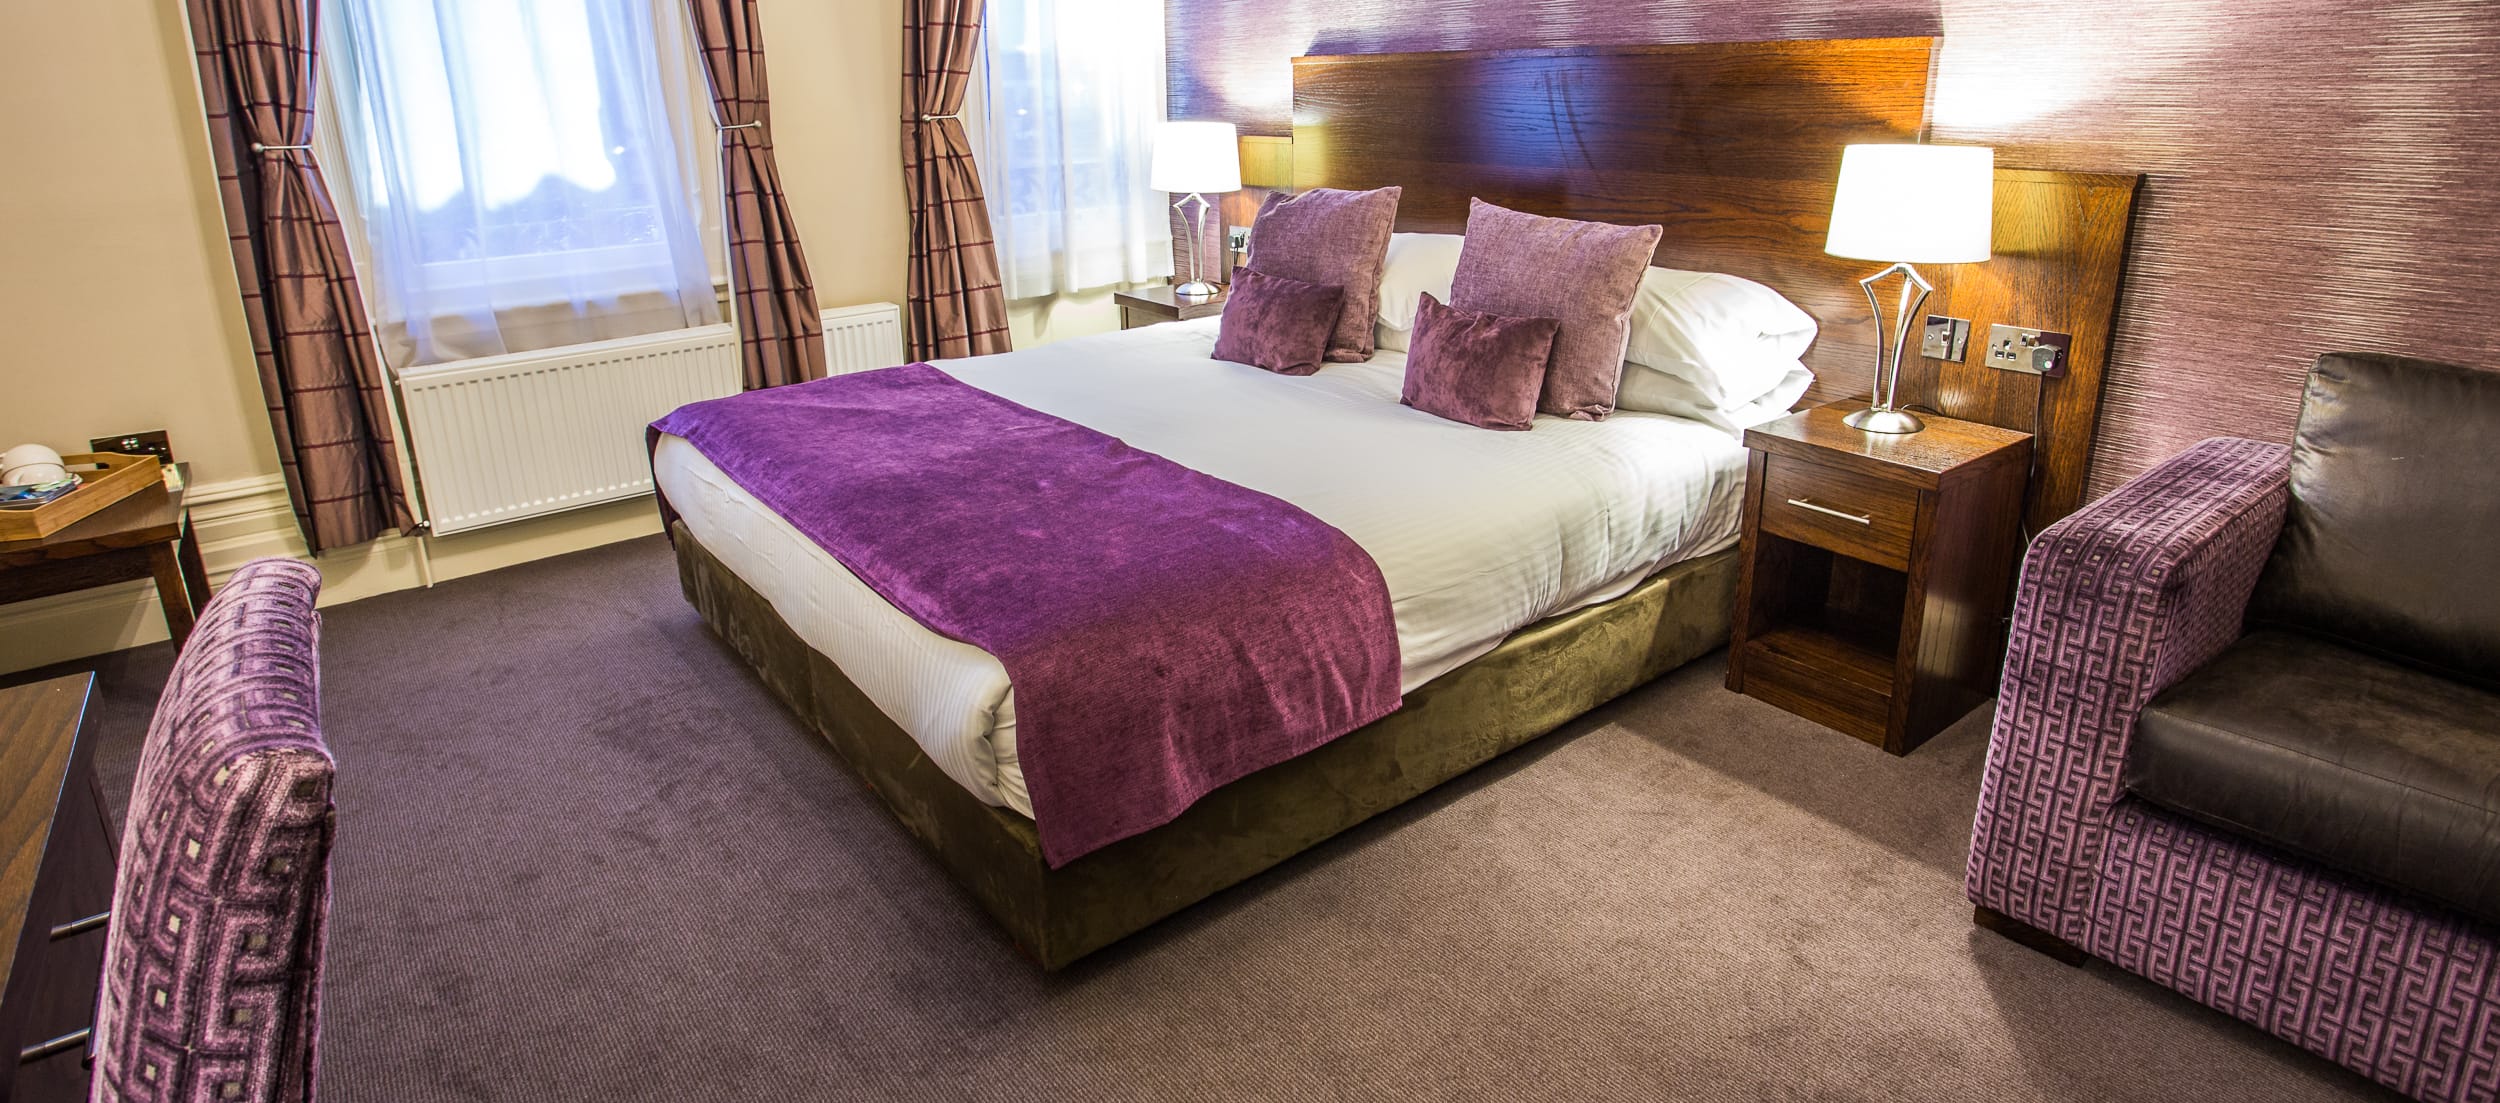 Hotel Room Bed | Hotel in Barrow in Furness - The Duke of Edinburgh Hotel